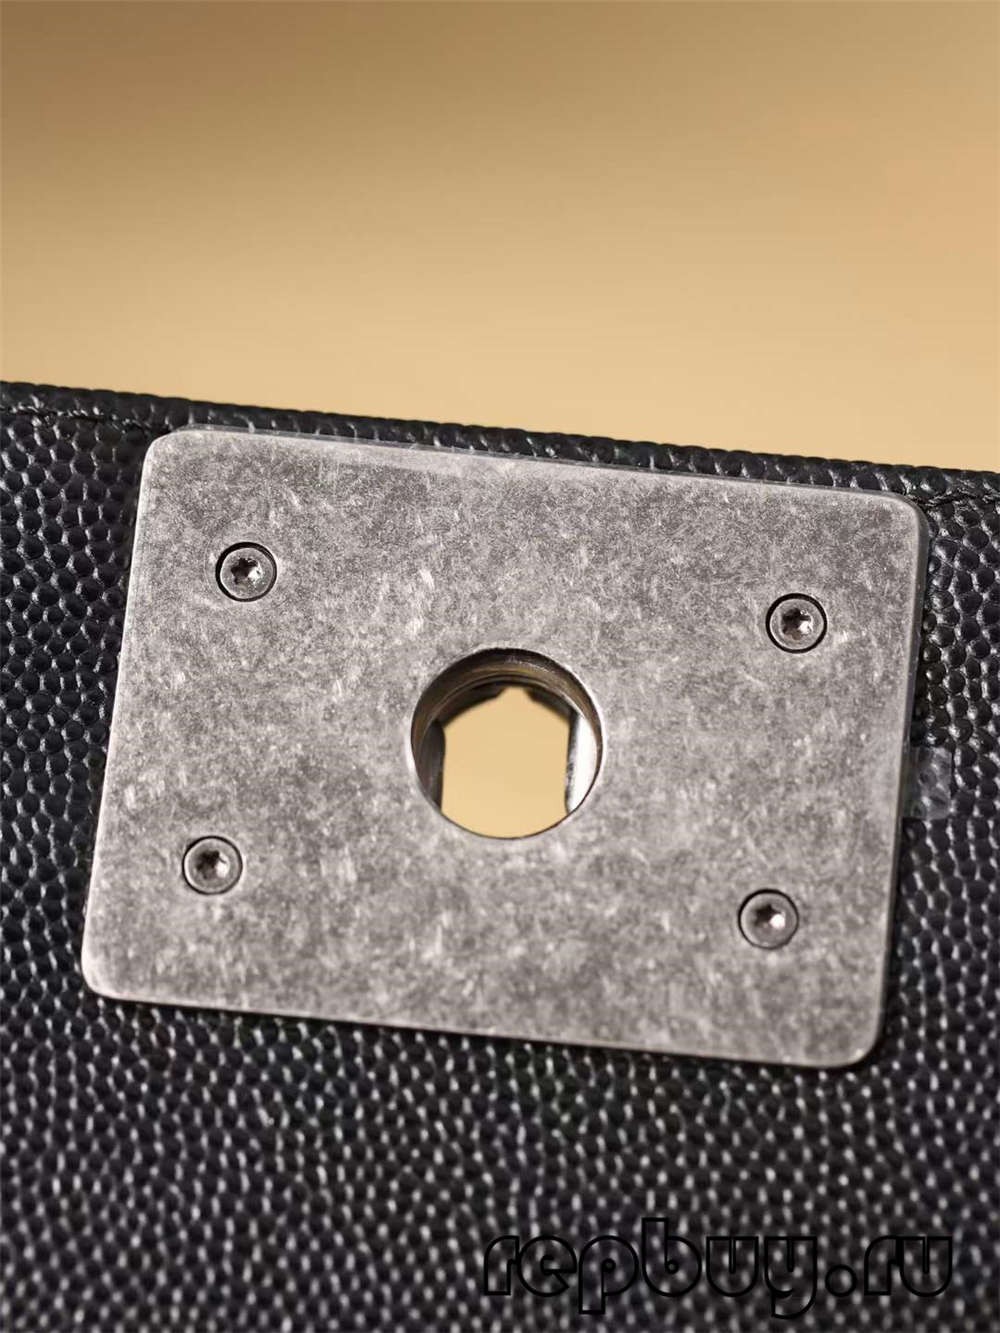 Chanel Le boy top replica handbag medium black hardware and interior label detail (2022 Updated)-Best Quality Fake designer Bag Review, Replica designer bag ru